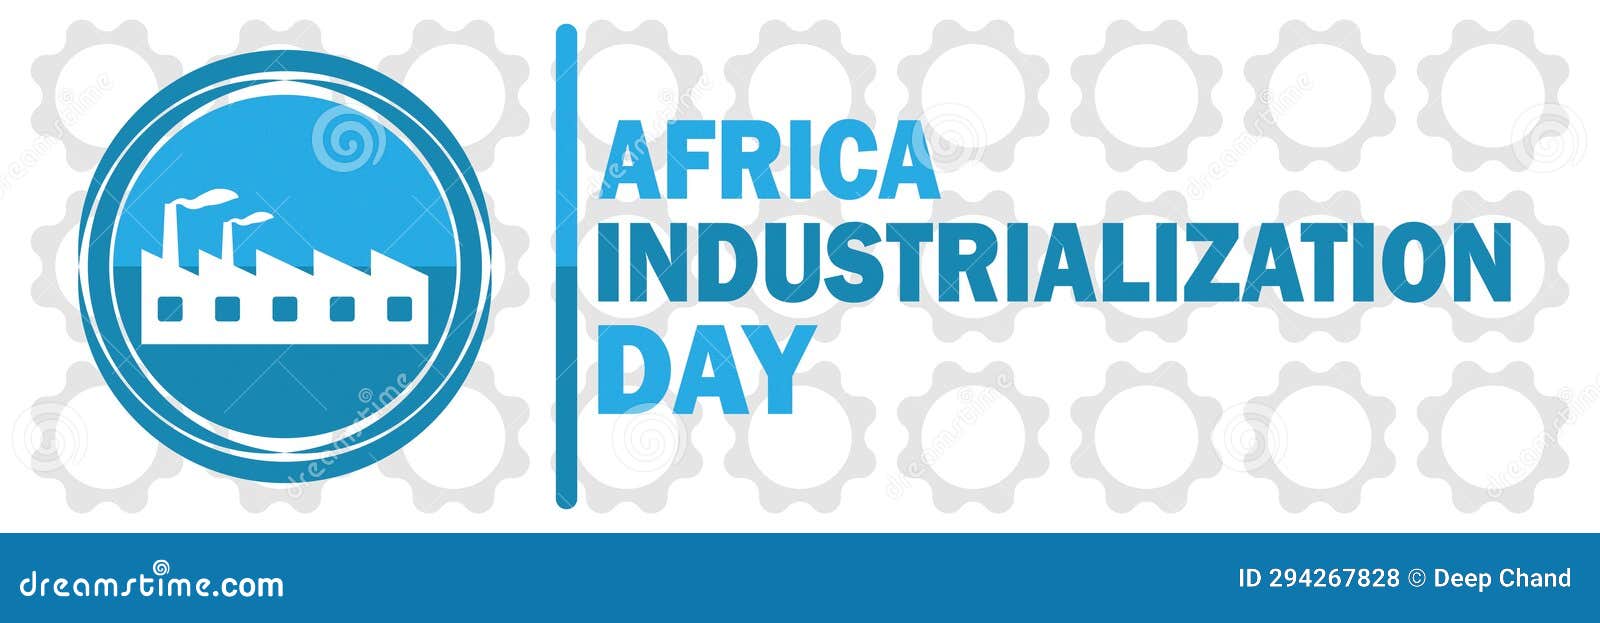 africa industrialization day